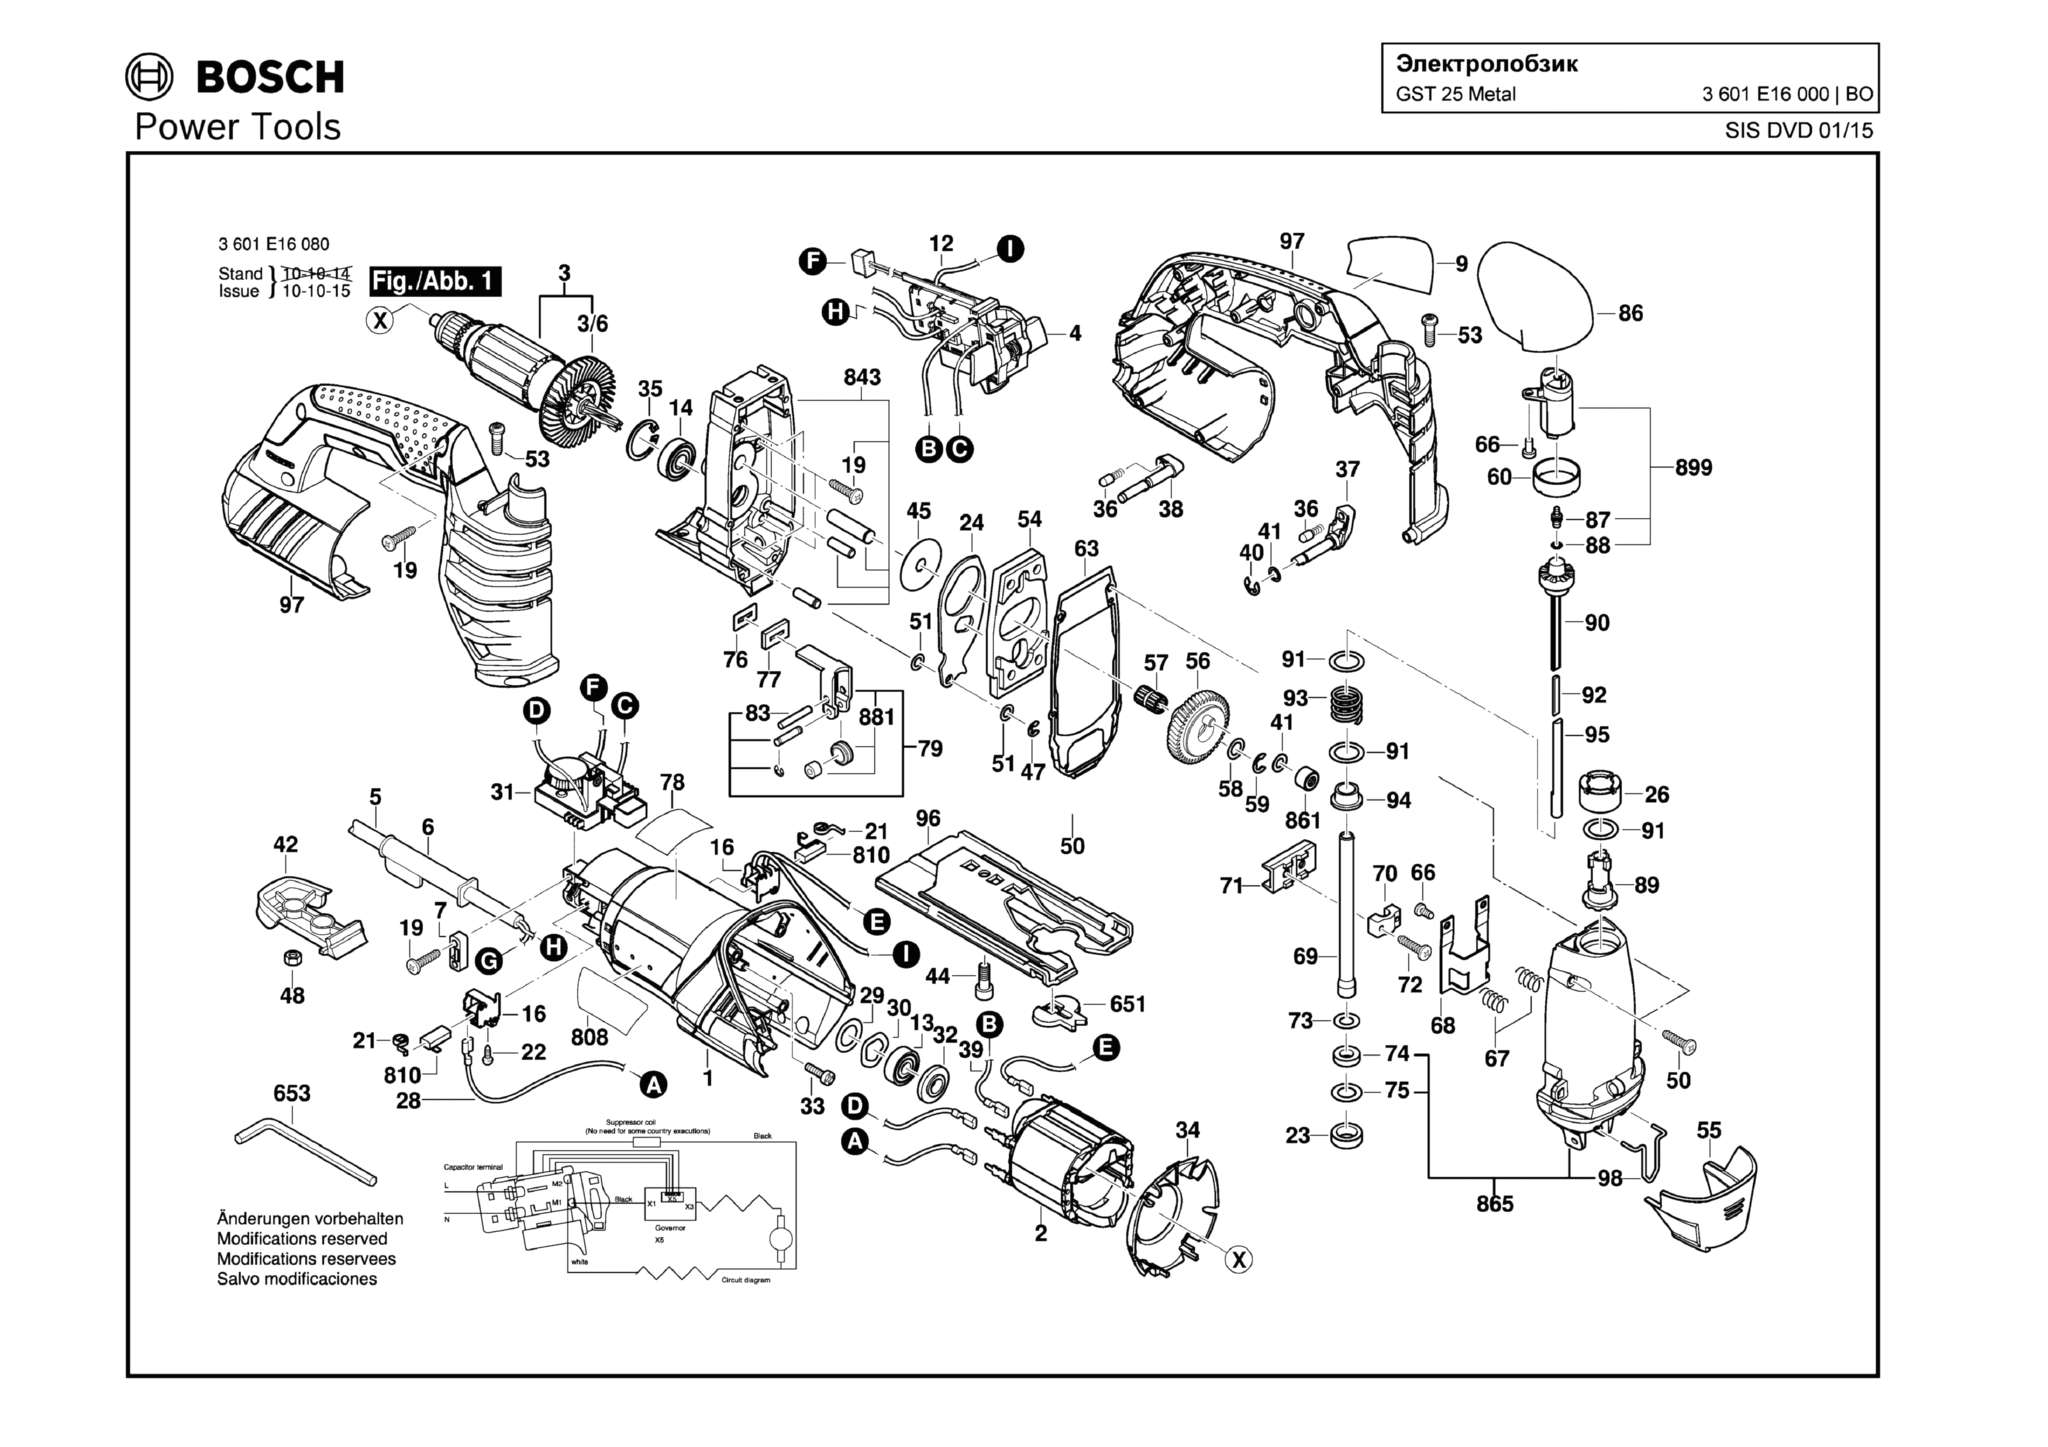 Запчасти, схема и деталировка Bosch GST 25 Metal (ТИП 3601E16000)